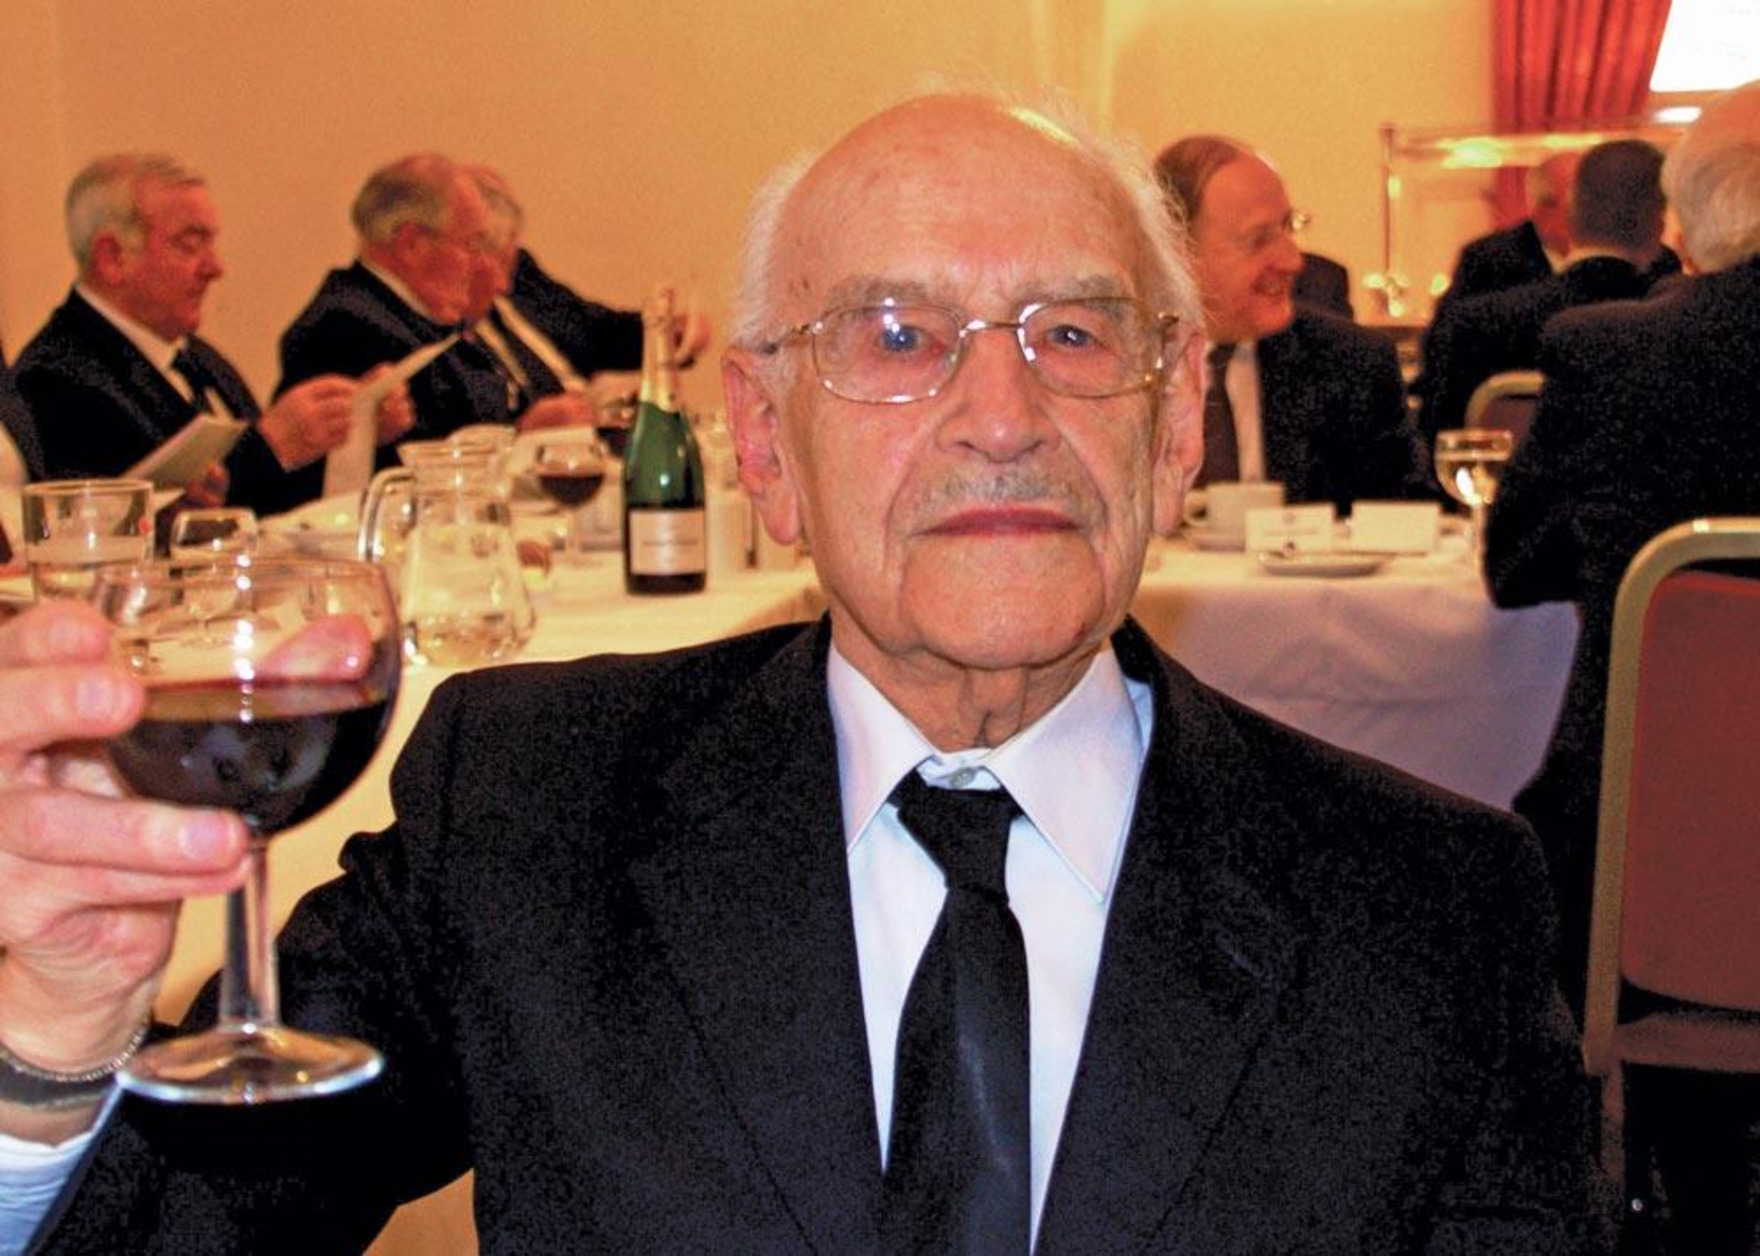 JAMES TERRY COURT BLUES W Bro FRANK BERLYN SLGR CELEBRATES HIS 100th BIRTHDAY